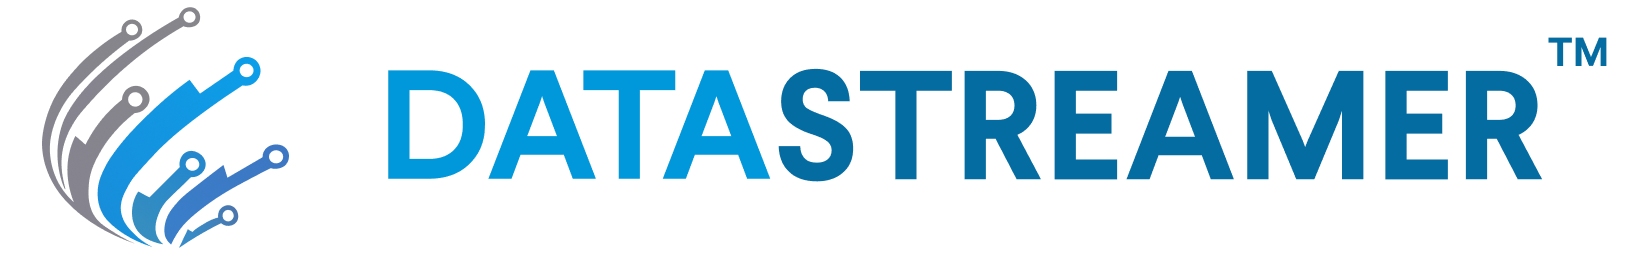 Datastreamer Logo - Trademark